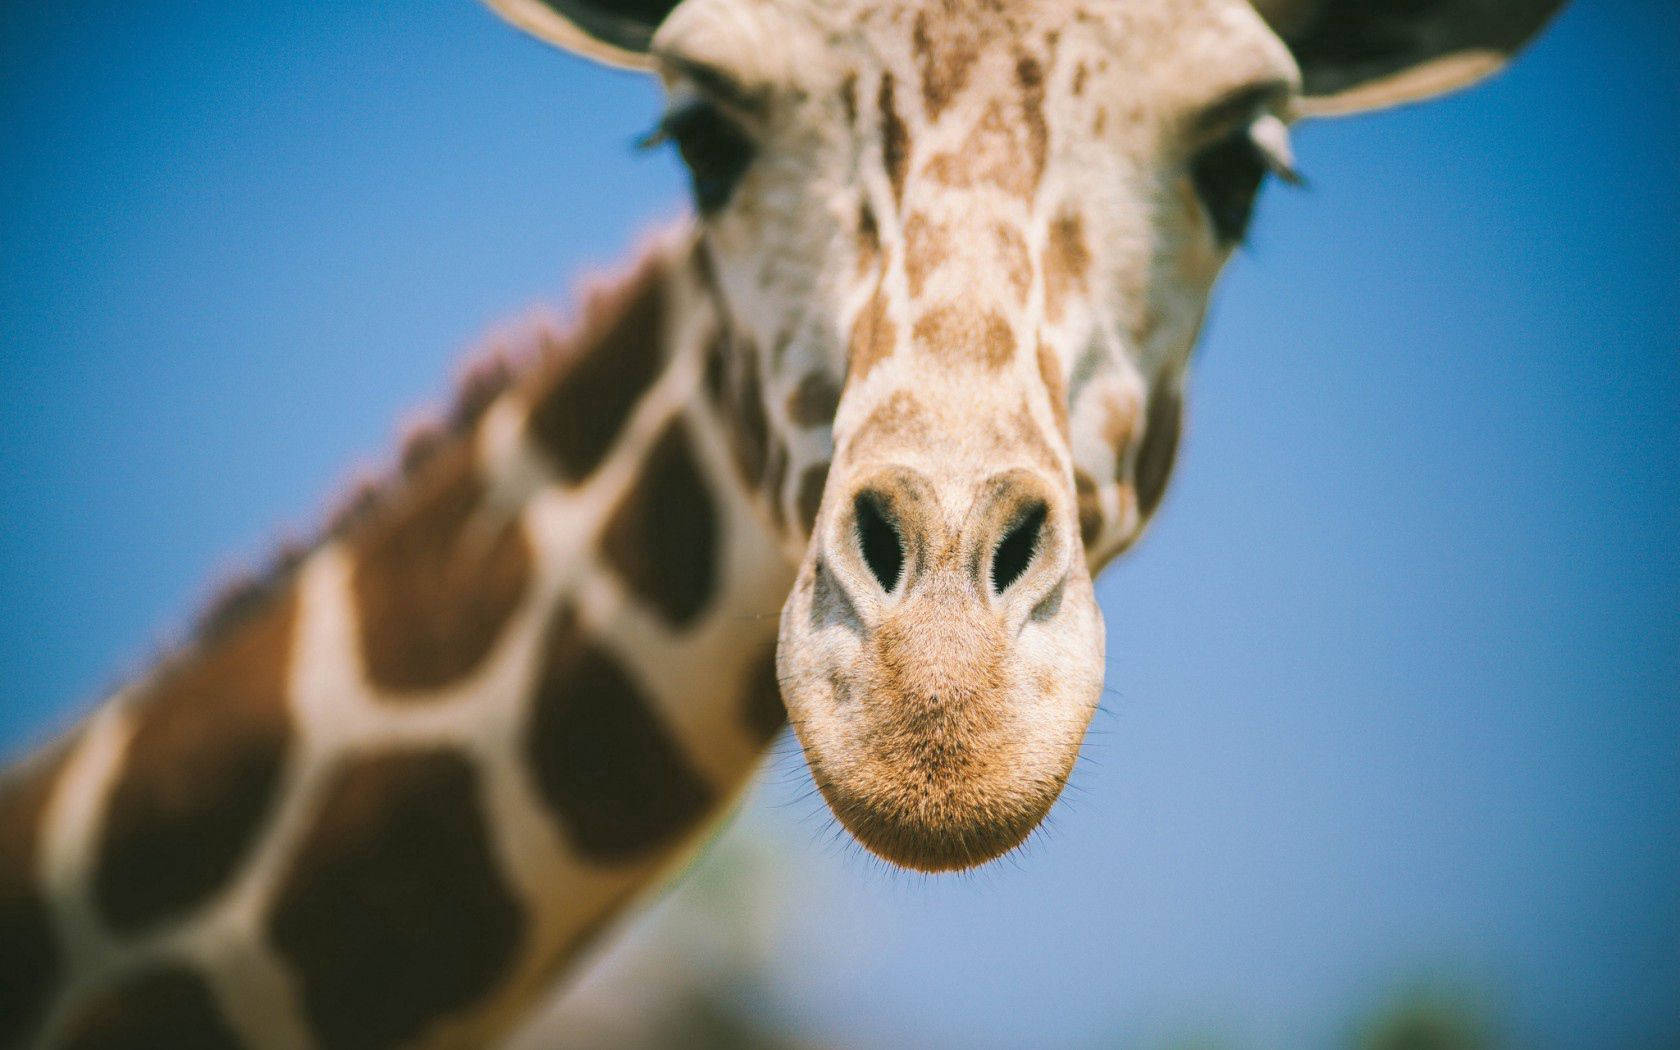 Blurry Giraffe's Face Background